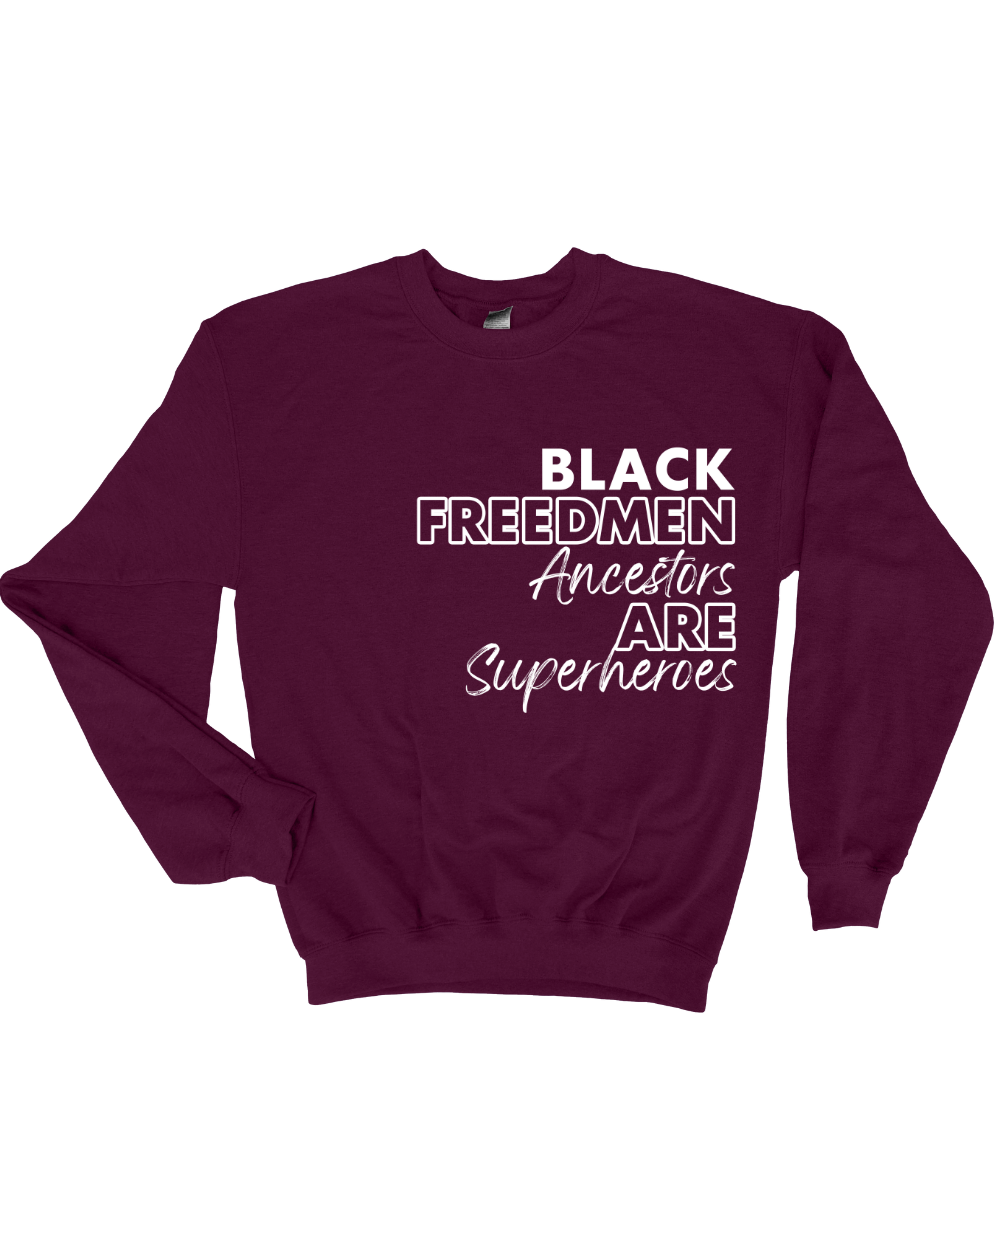 Freedmen Are Superheroes Sweatshirt Design